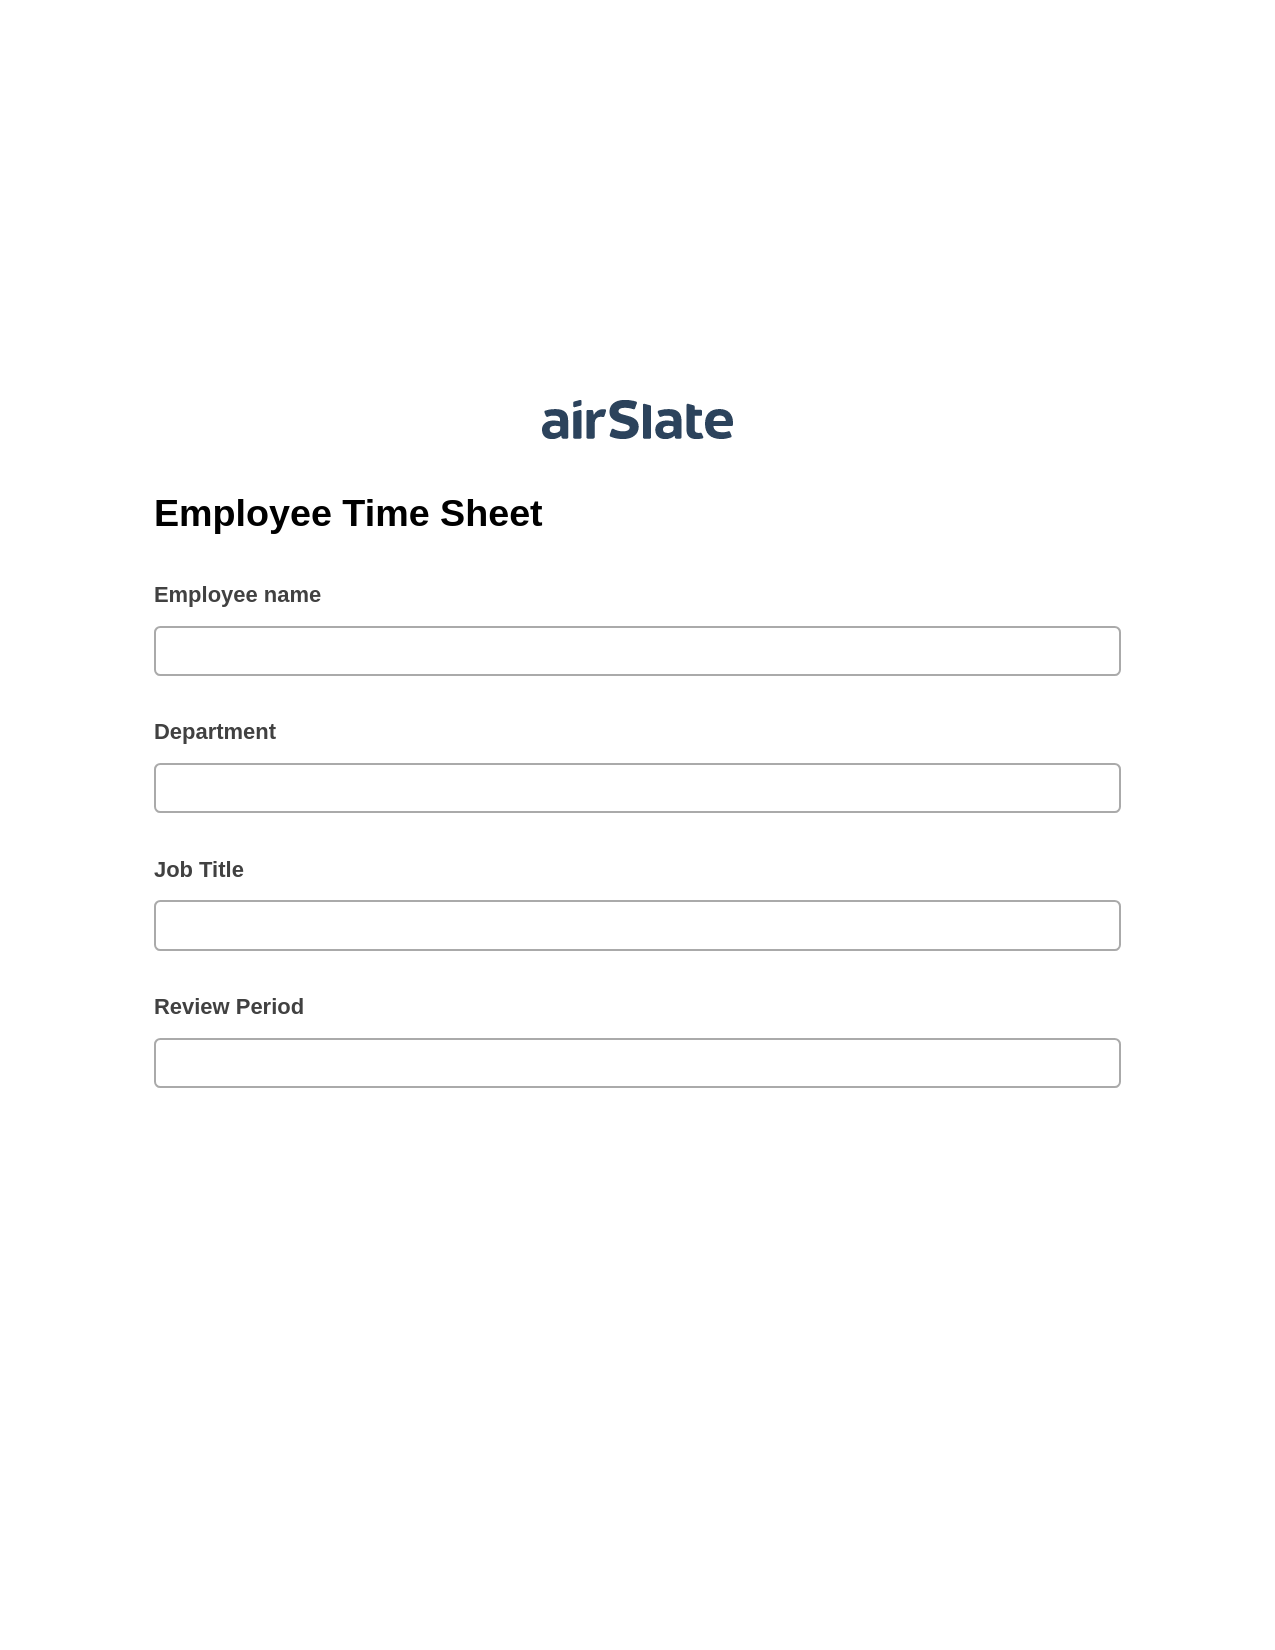 Multirole Employee Time Sheet Pre-fill from CSV File Bot, Jira Bot, Email Notification Postfinish Bot